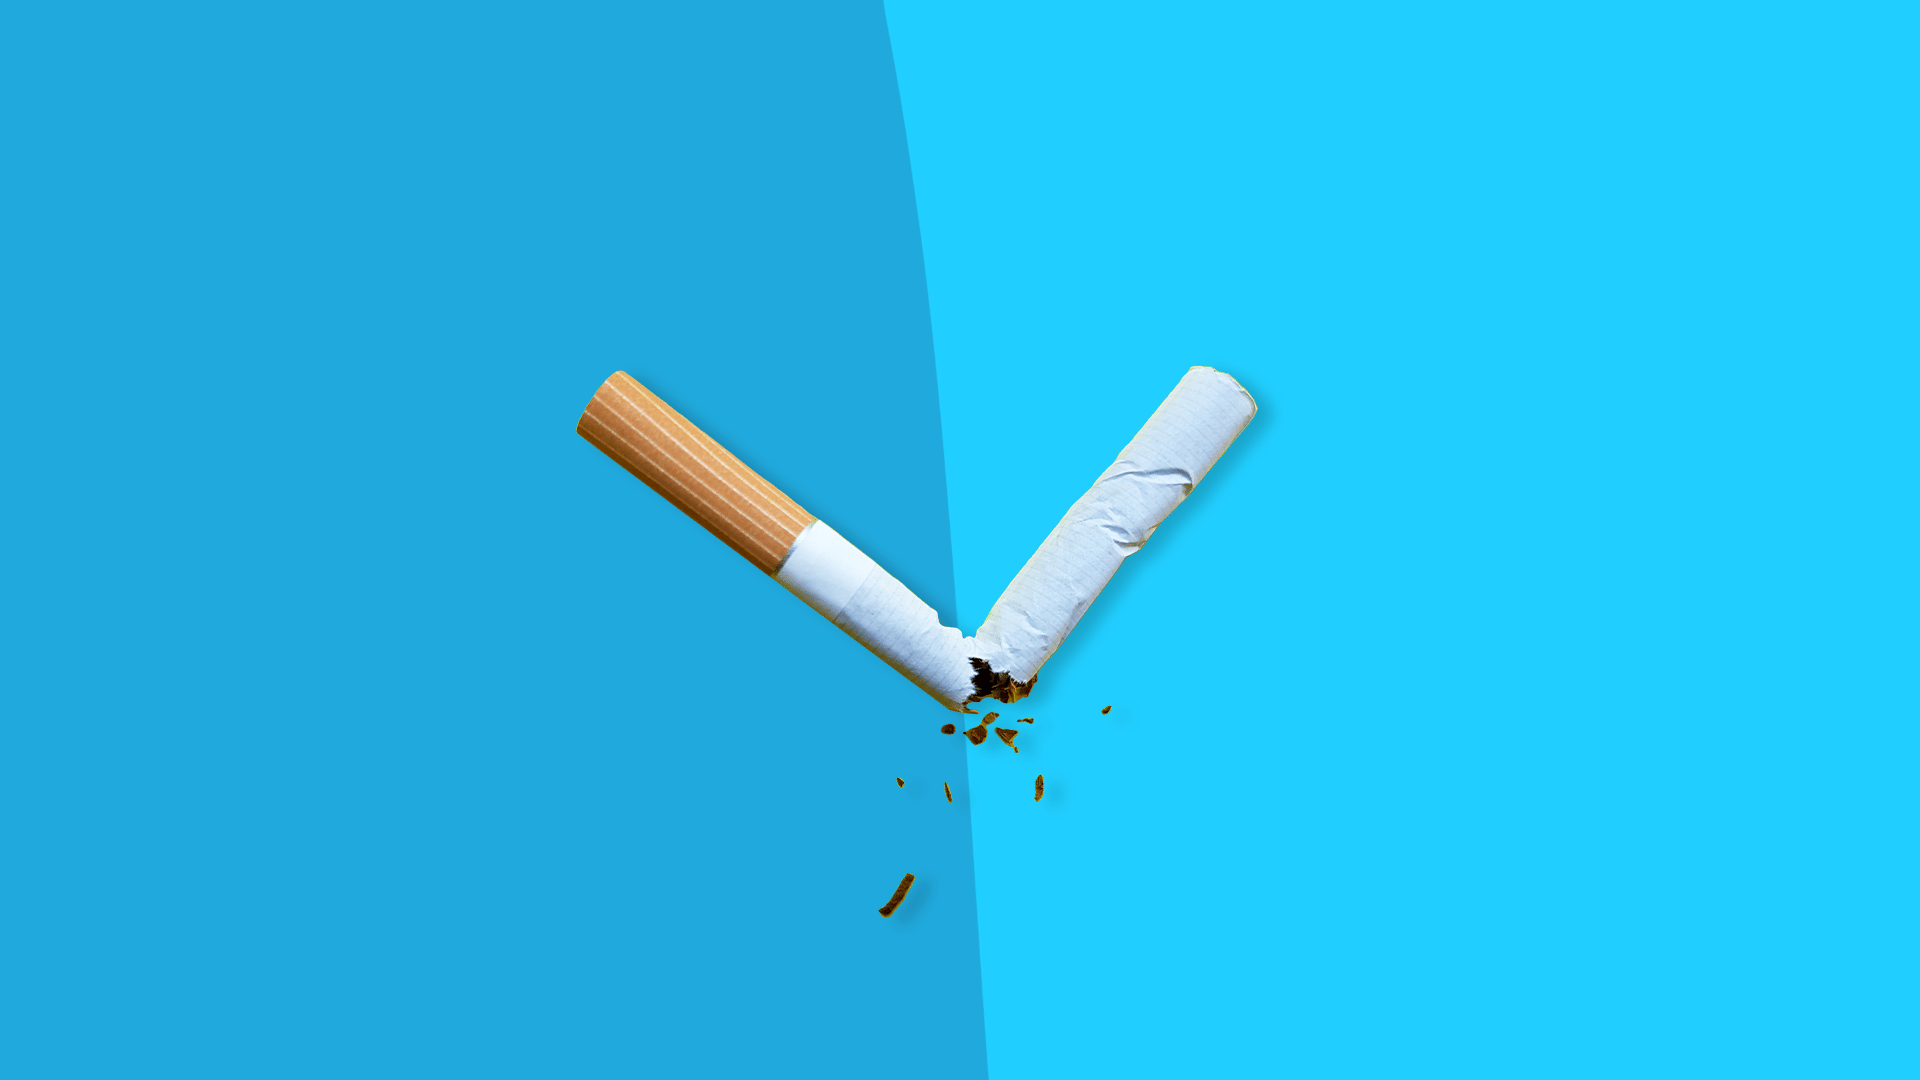 A cigarette represents nicotine withdrawal symptoms